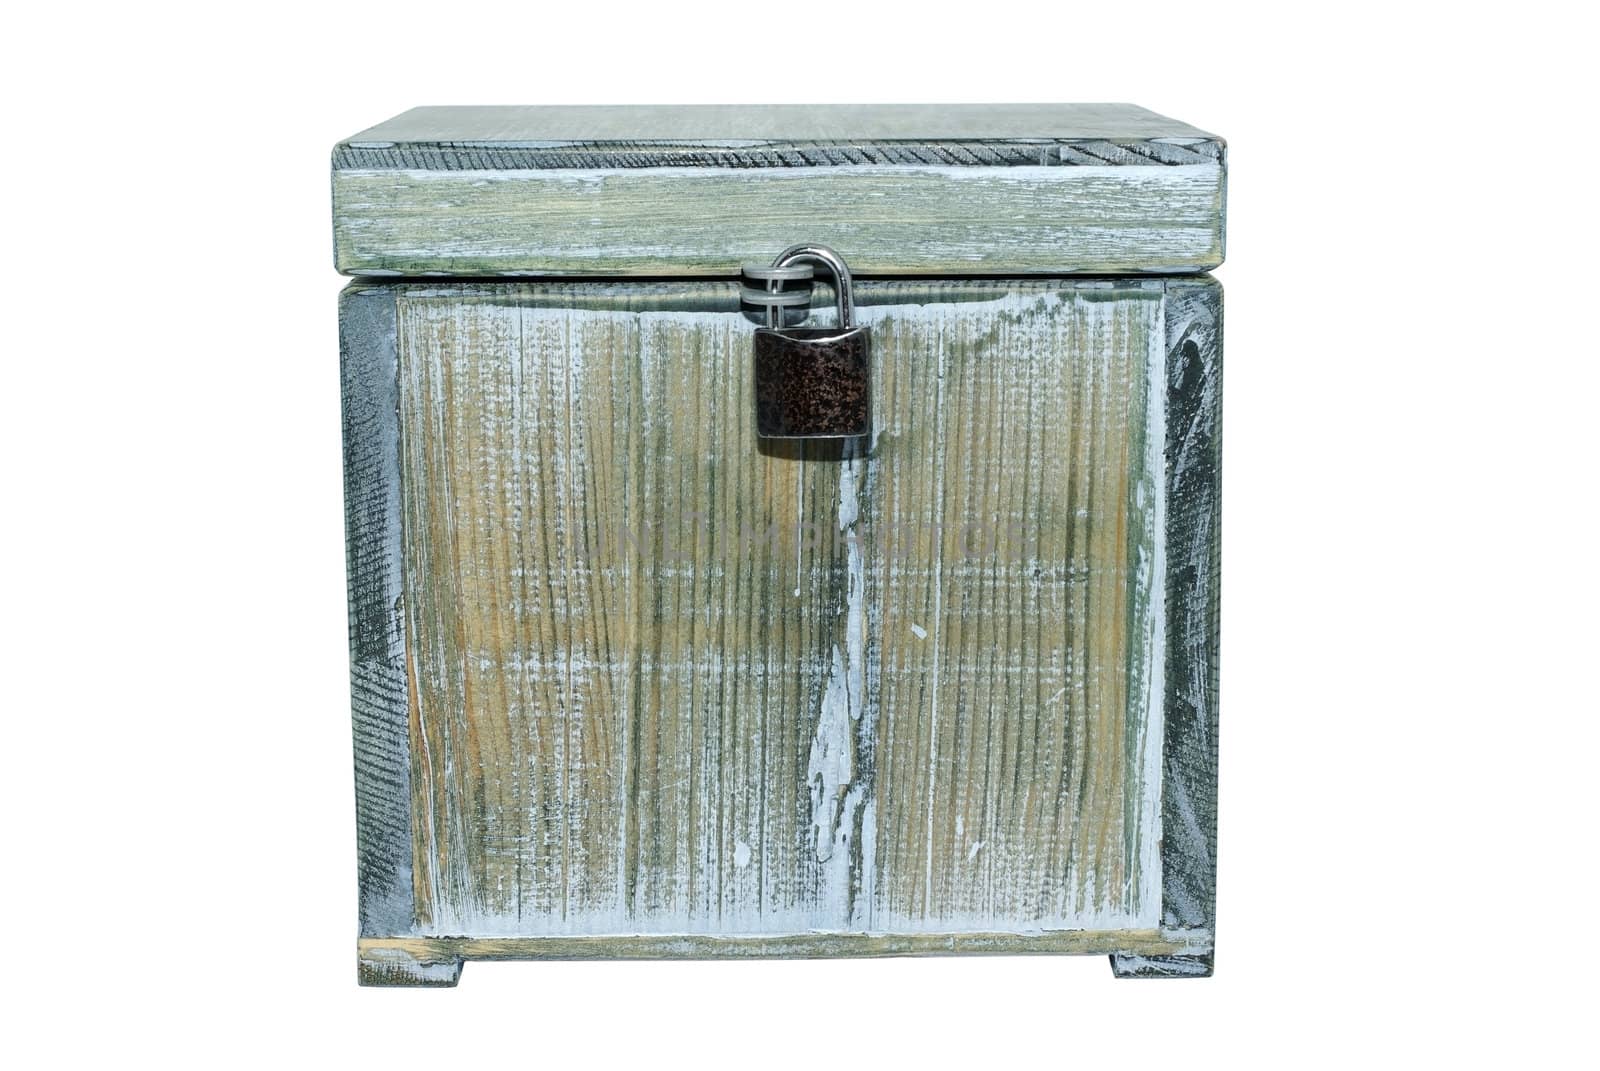 Old box locked with padlock isolated on white background.